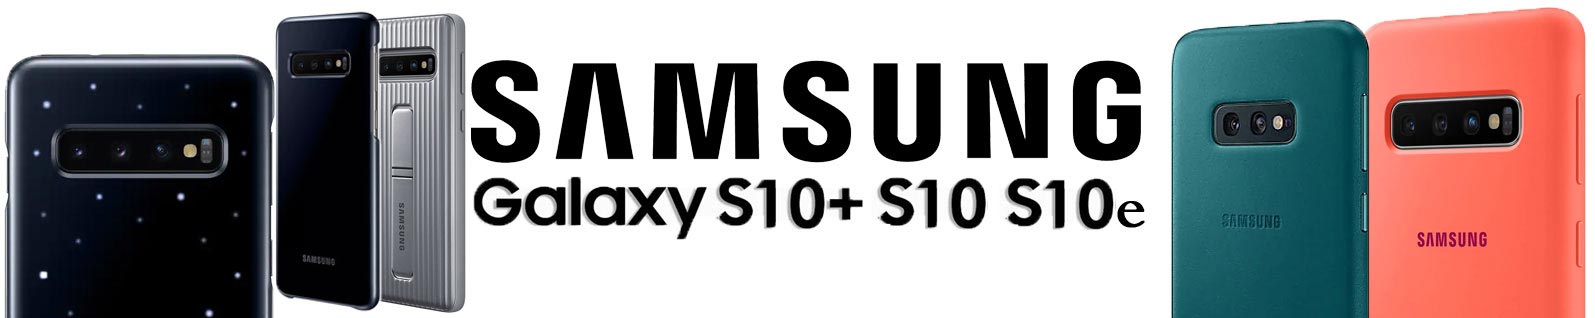 New Samsung S10